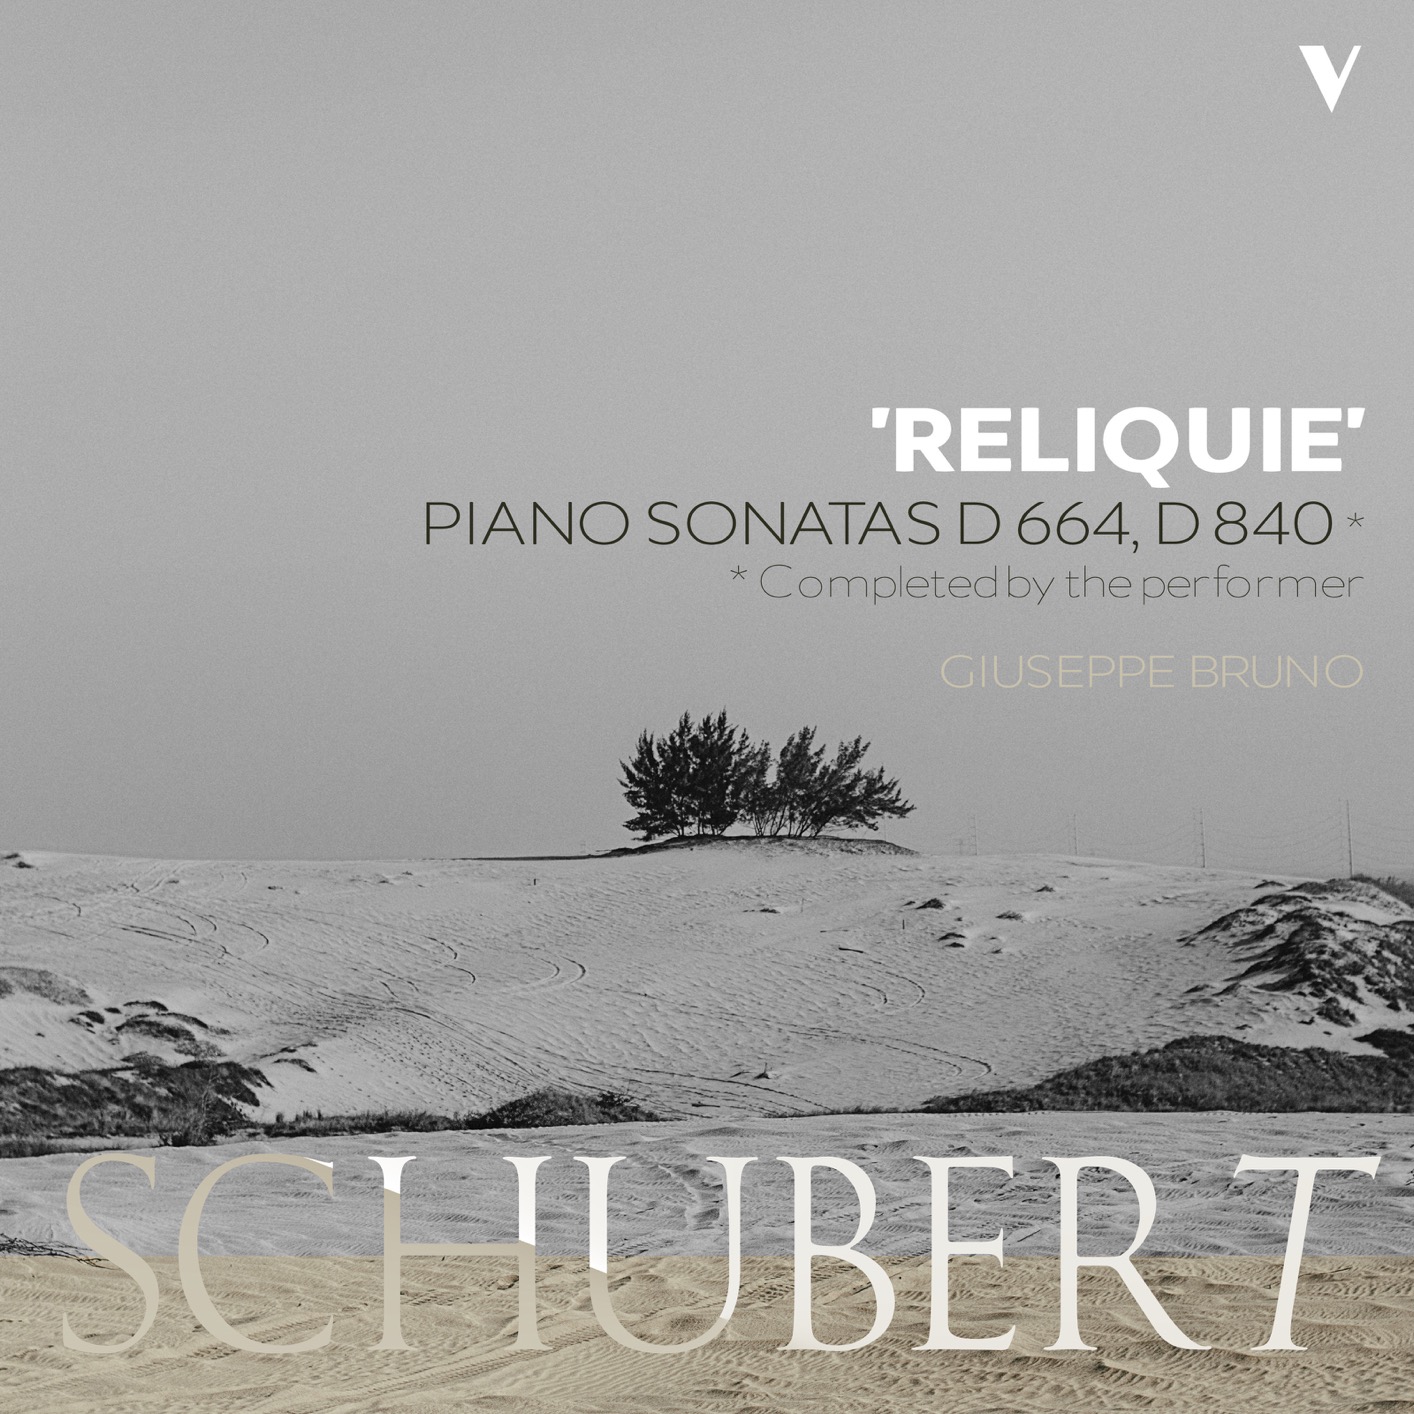 Giuseppe Bruno – Schubert: Piano Sonata No. 13, D. 664 & No. 15, D. 840 "Reliquie" (2019) [FLAC 24bit/88,2kHz]